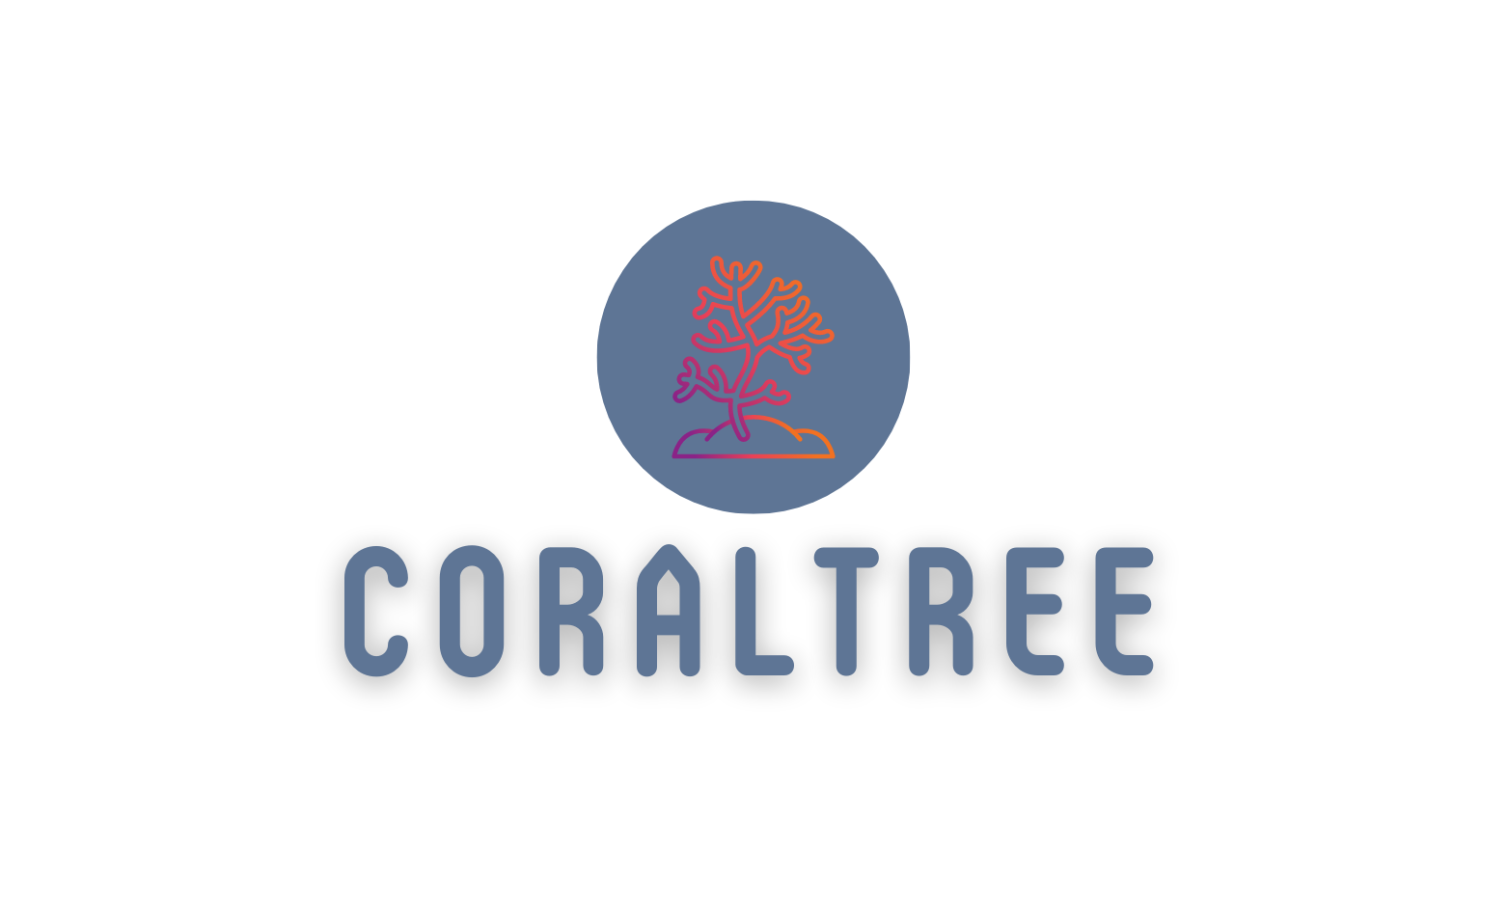 CoralTree.xyz